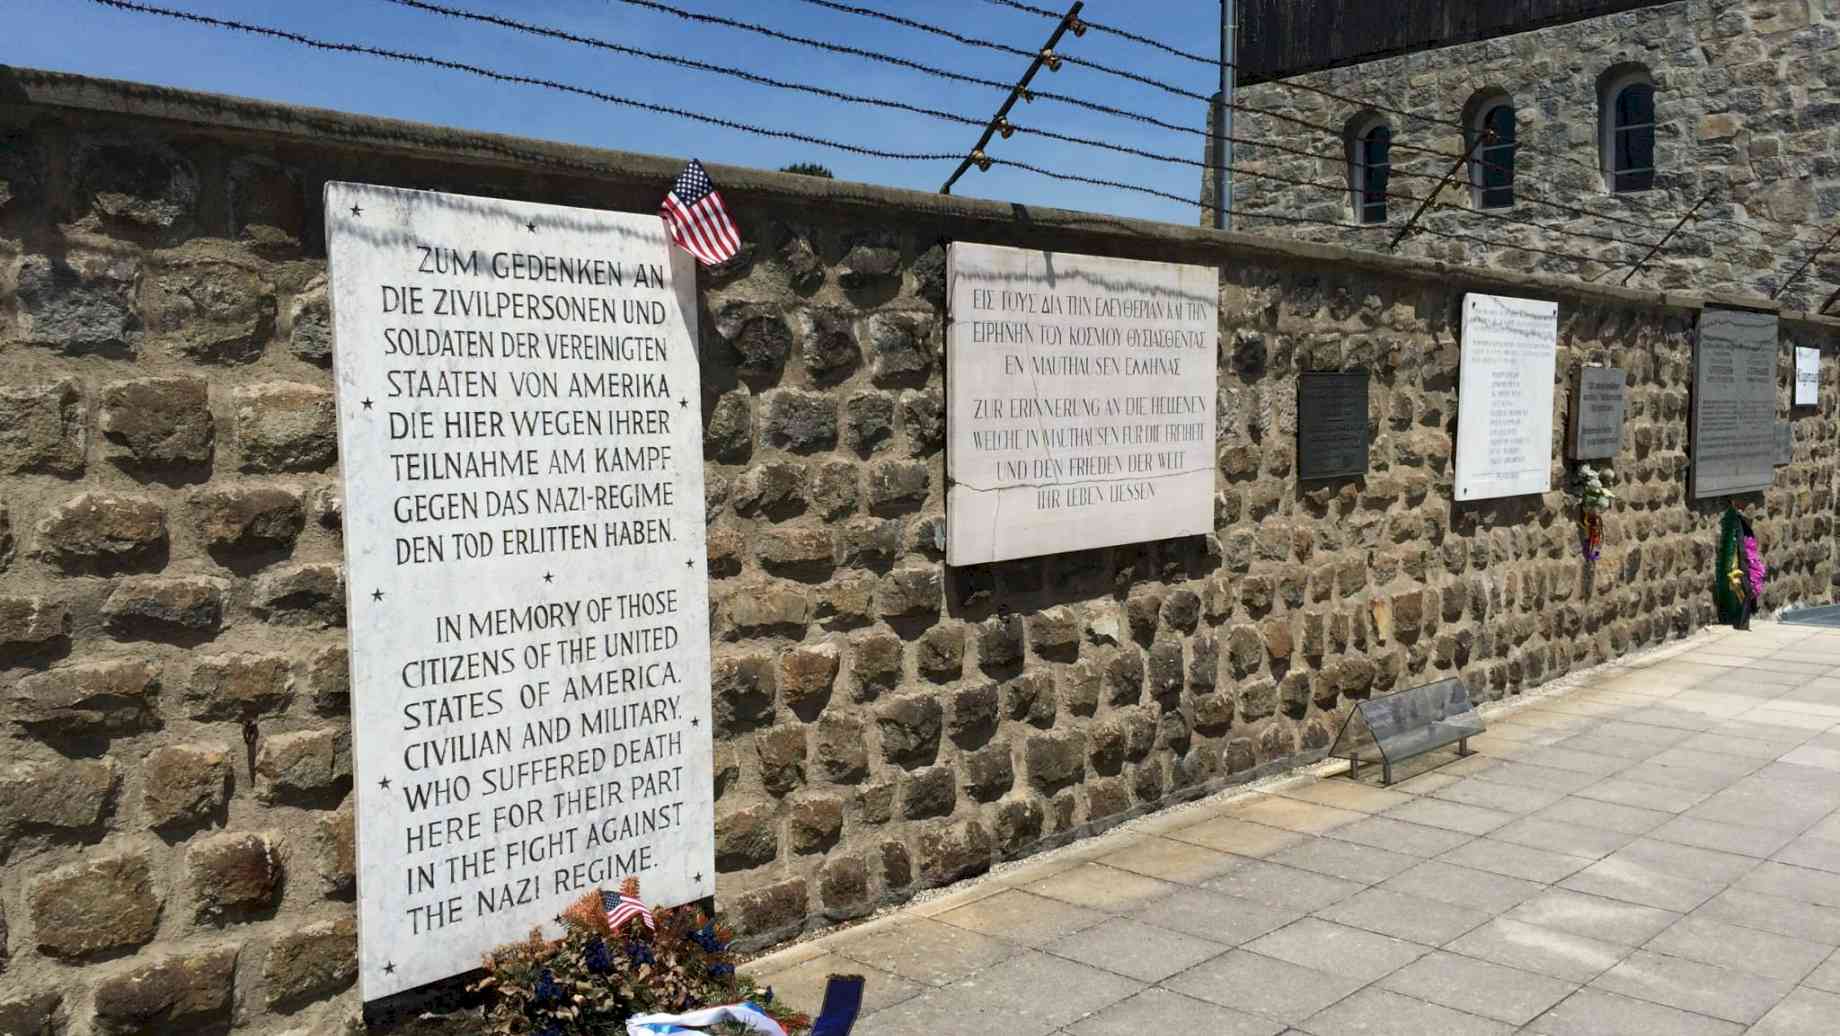 Dedication plaques at Mauthausen